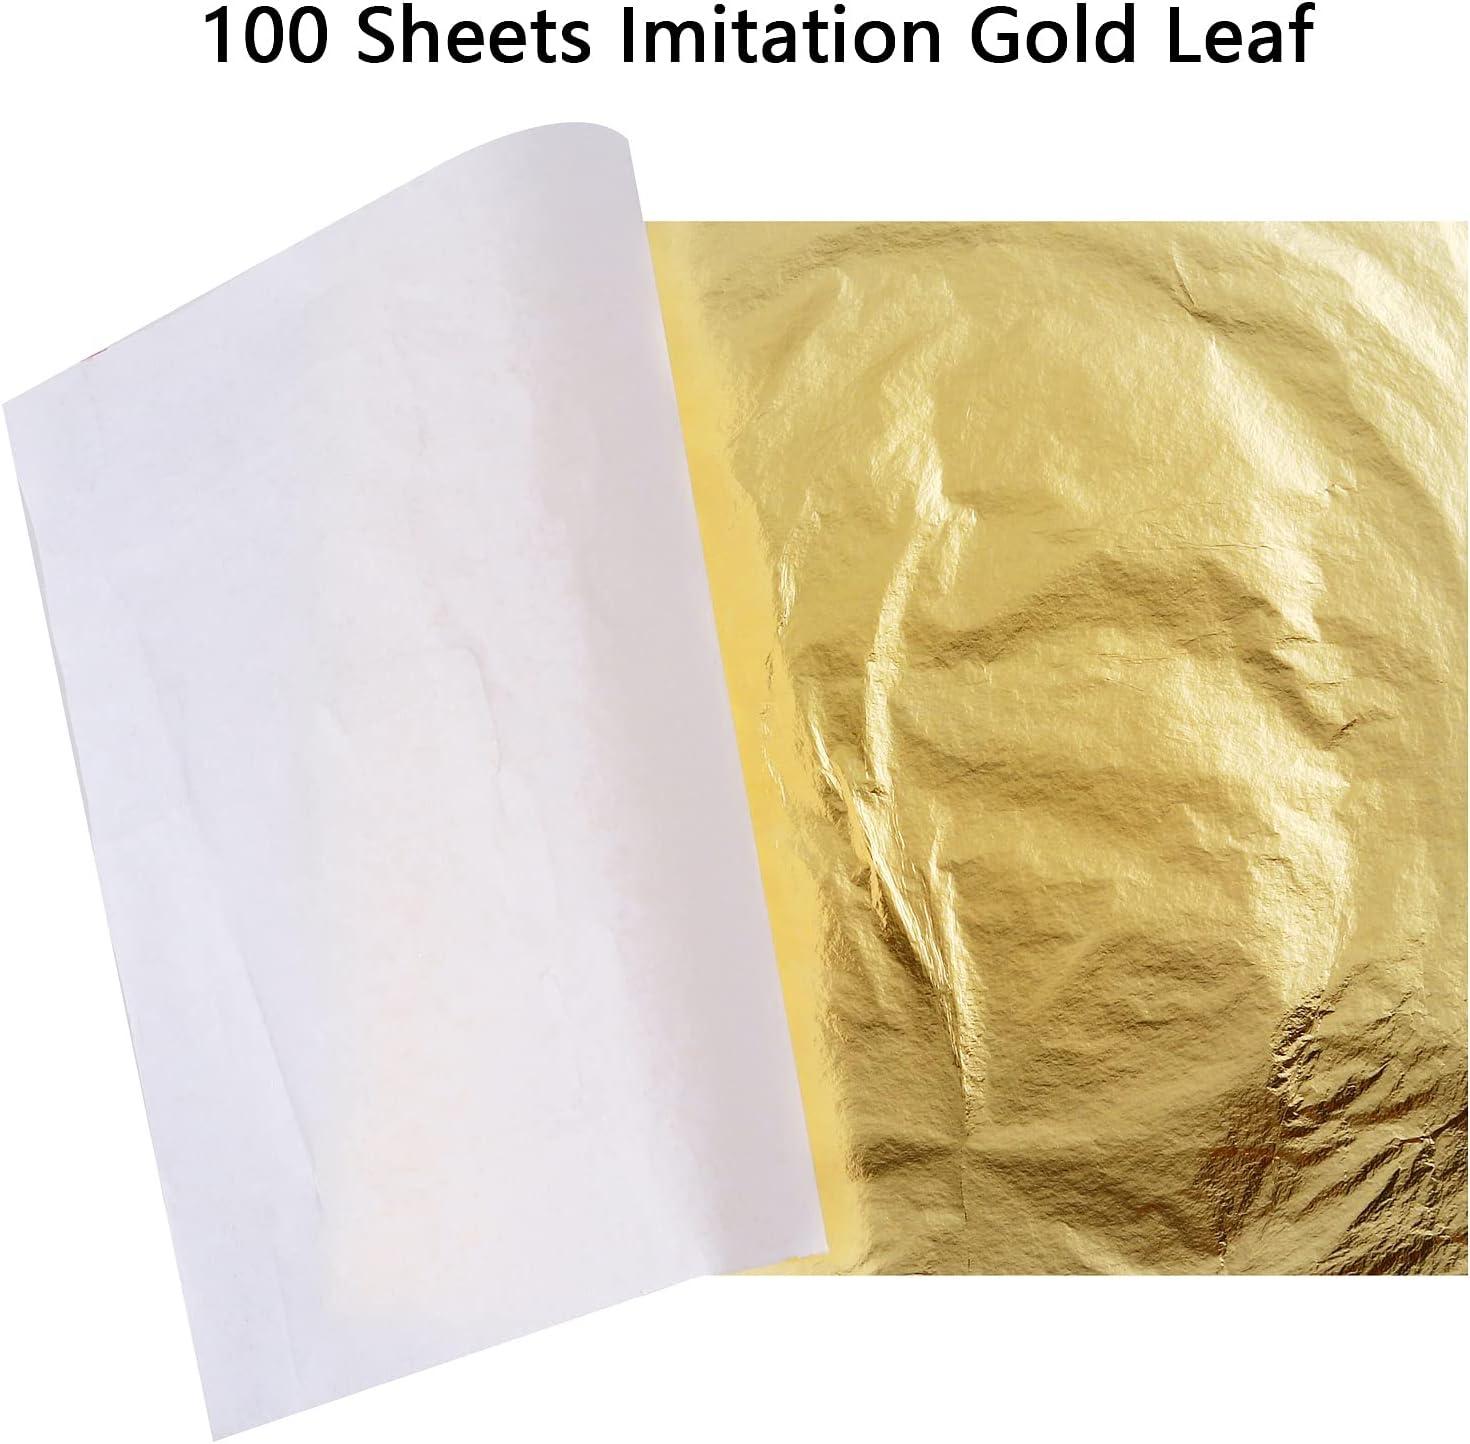 400pcs Imitation Gold Leaf for Arts, Gilding Crafting, Painting, Furniture  Decoration, Imitation Gold Foil Sheets 5.5 x 5.5 (Gold-400pcs)